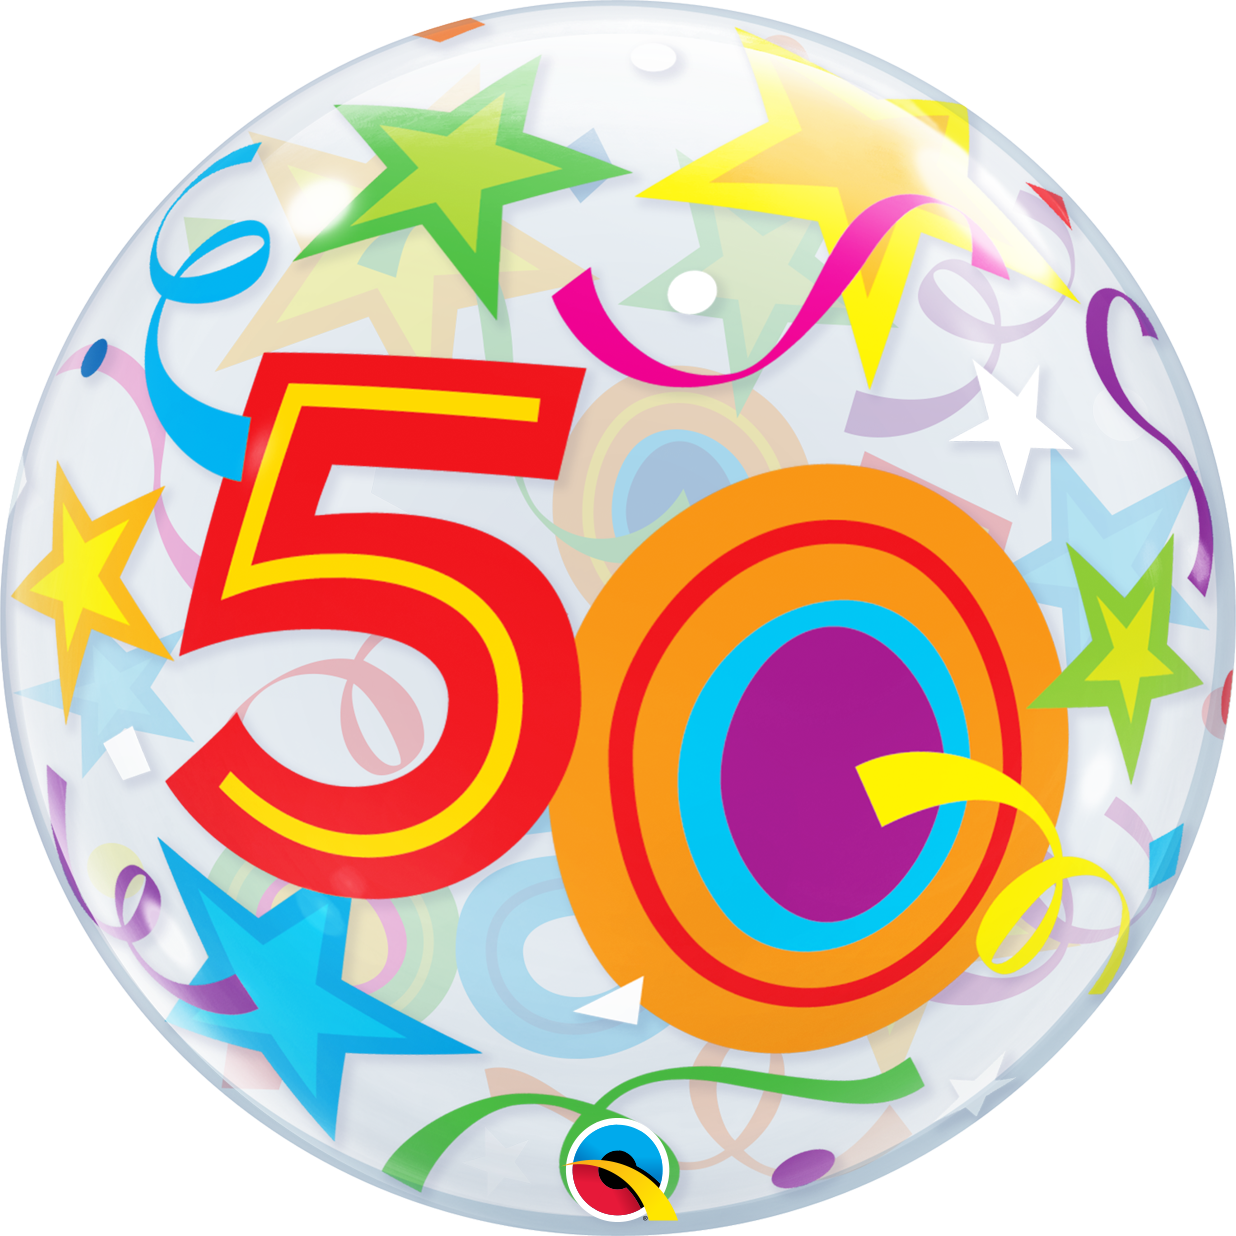 50th Birthday Bubble Balloon with Brilliant Stars & Ribbons